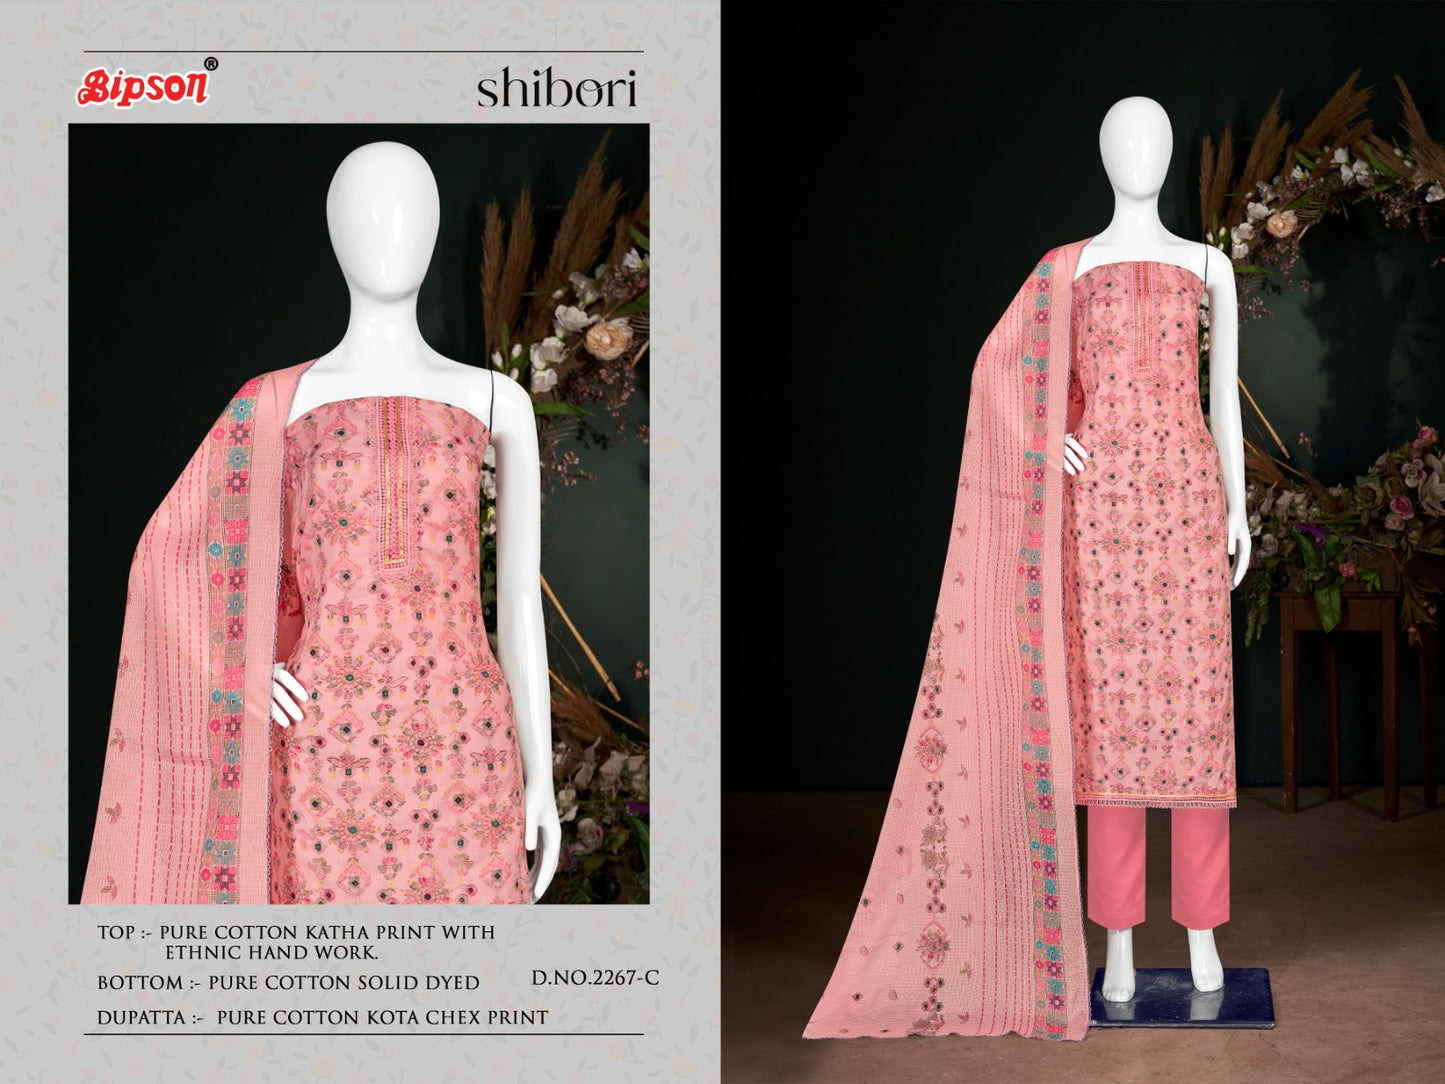 Shibori-2267 Bipson Prints Cotton Pant Style Suits